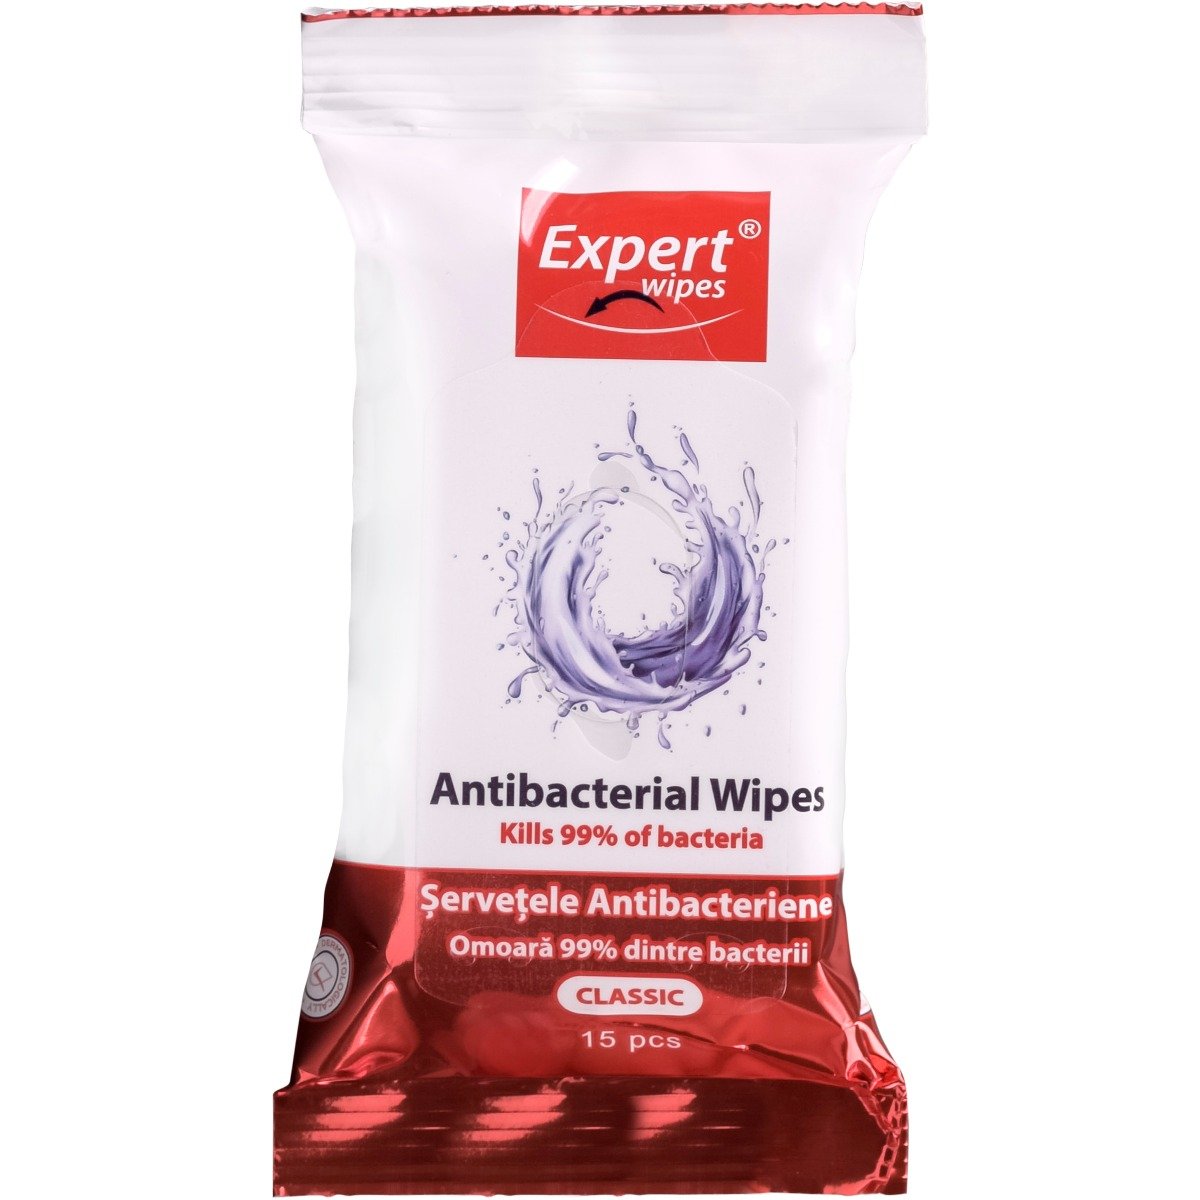 Servetele antibacteriene Expert Wipes Clasic, 15 buc Expert Wipes